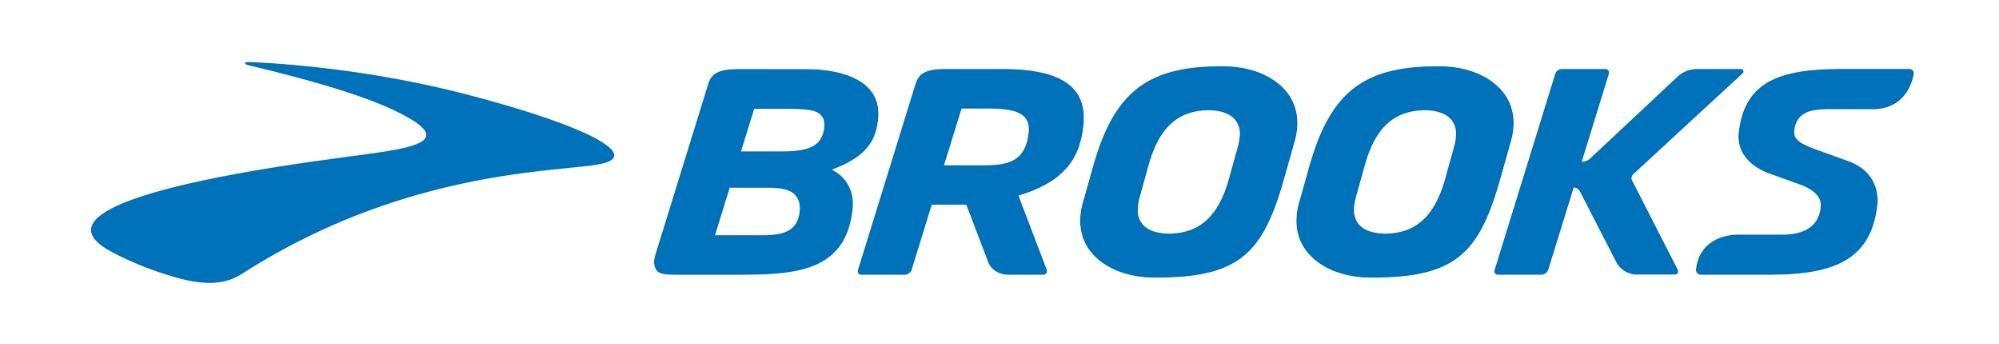 Brooks Logo - LogoDix